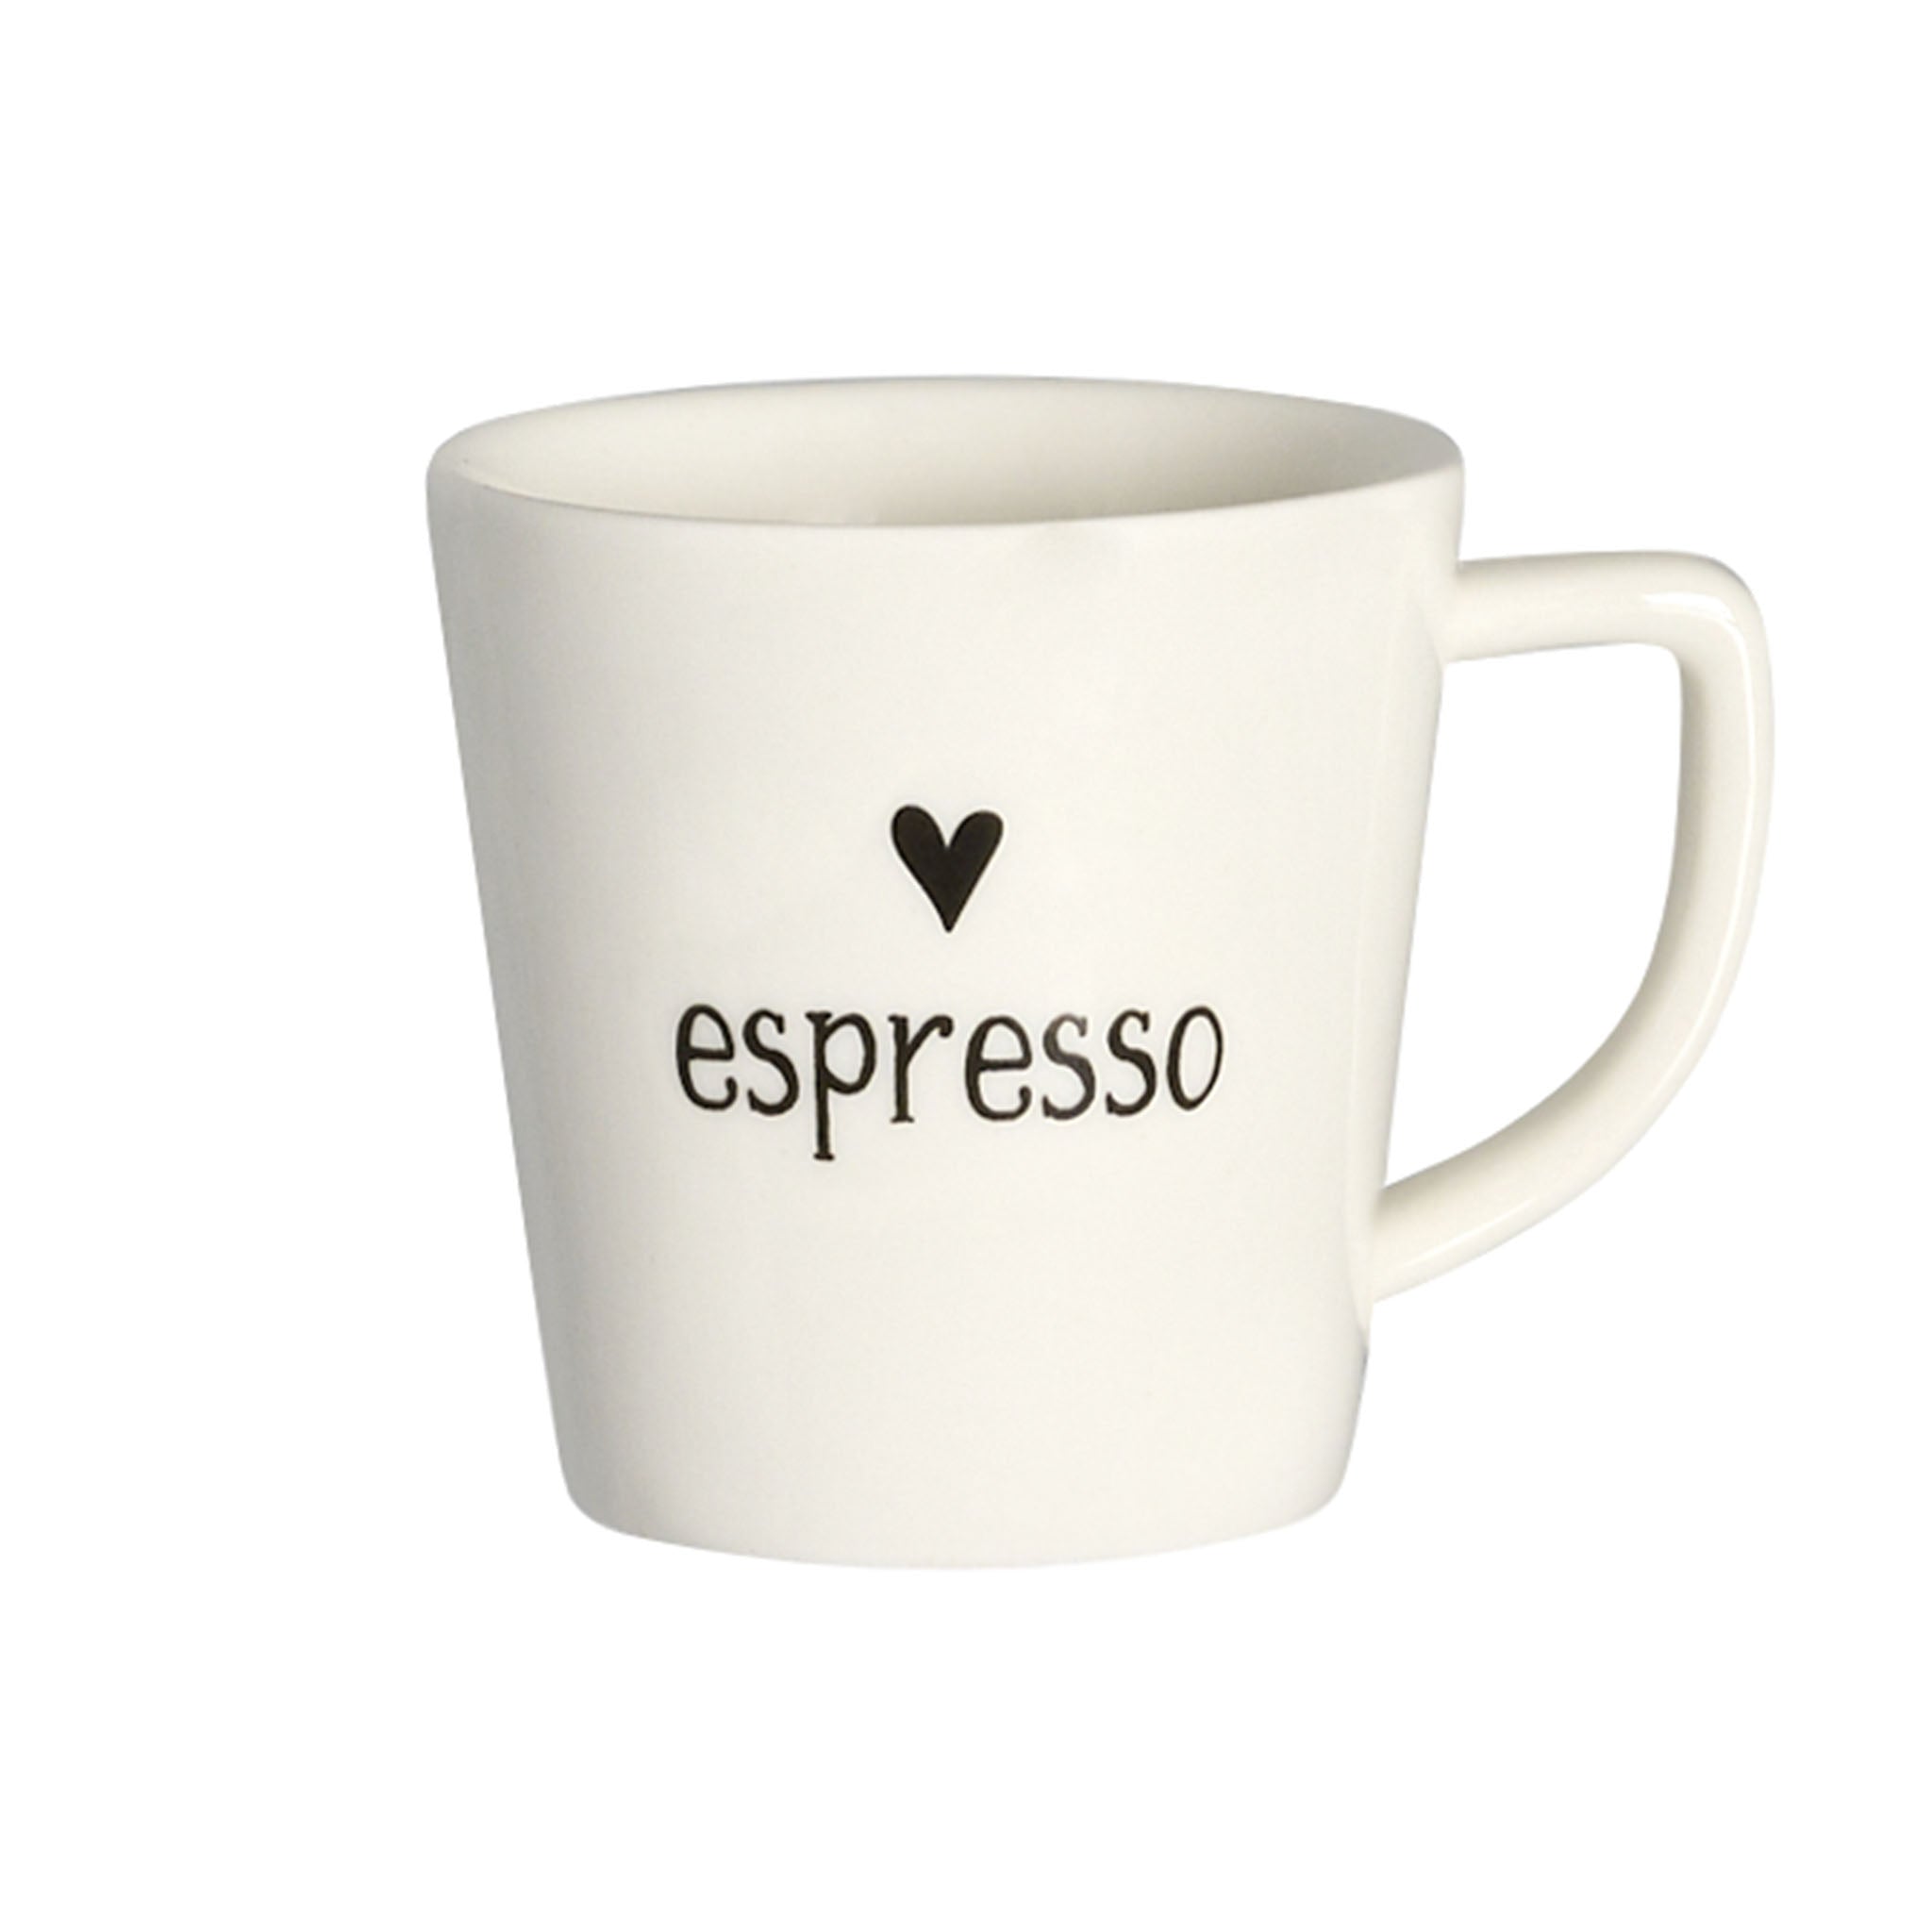 Espresso with black heart Espresso Cup - Set of 2